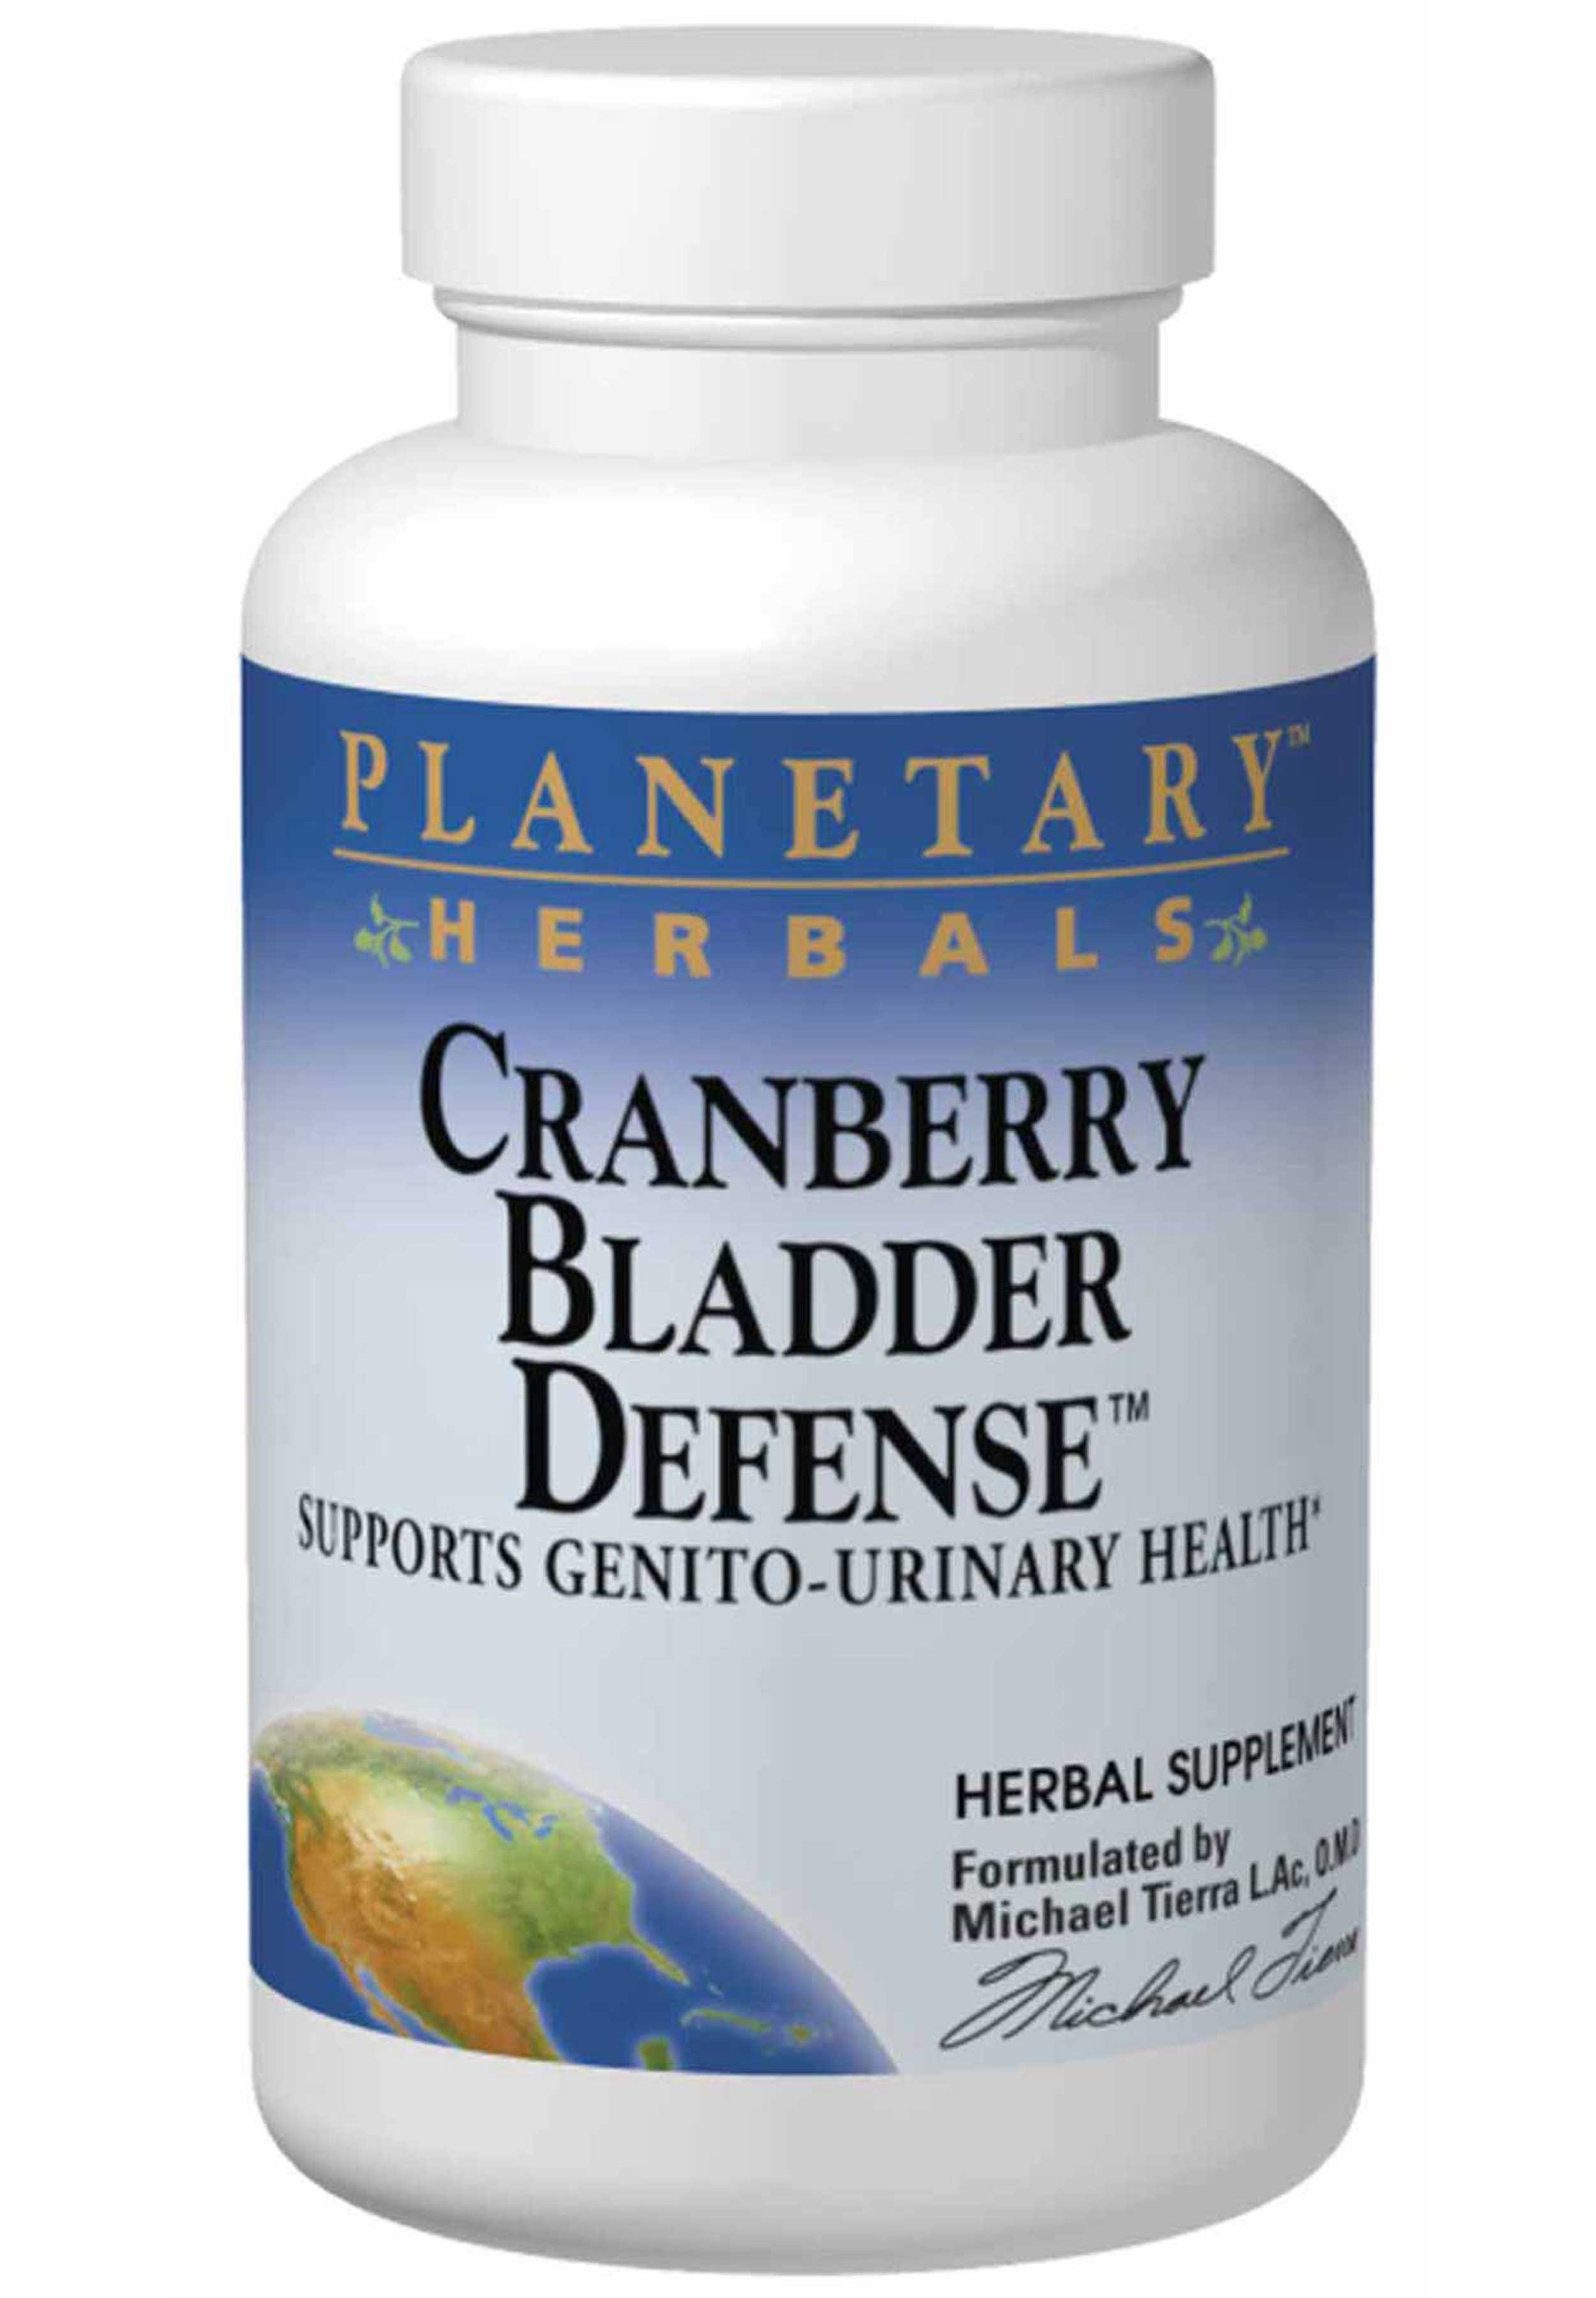 Planetary Herbals Cranberry Bladder Defense™